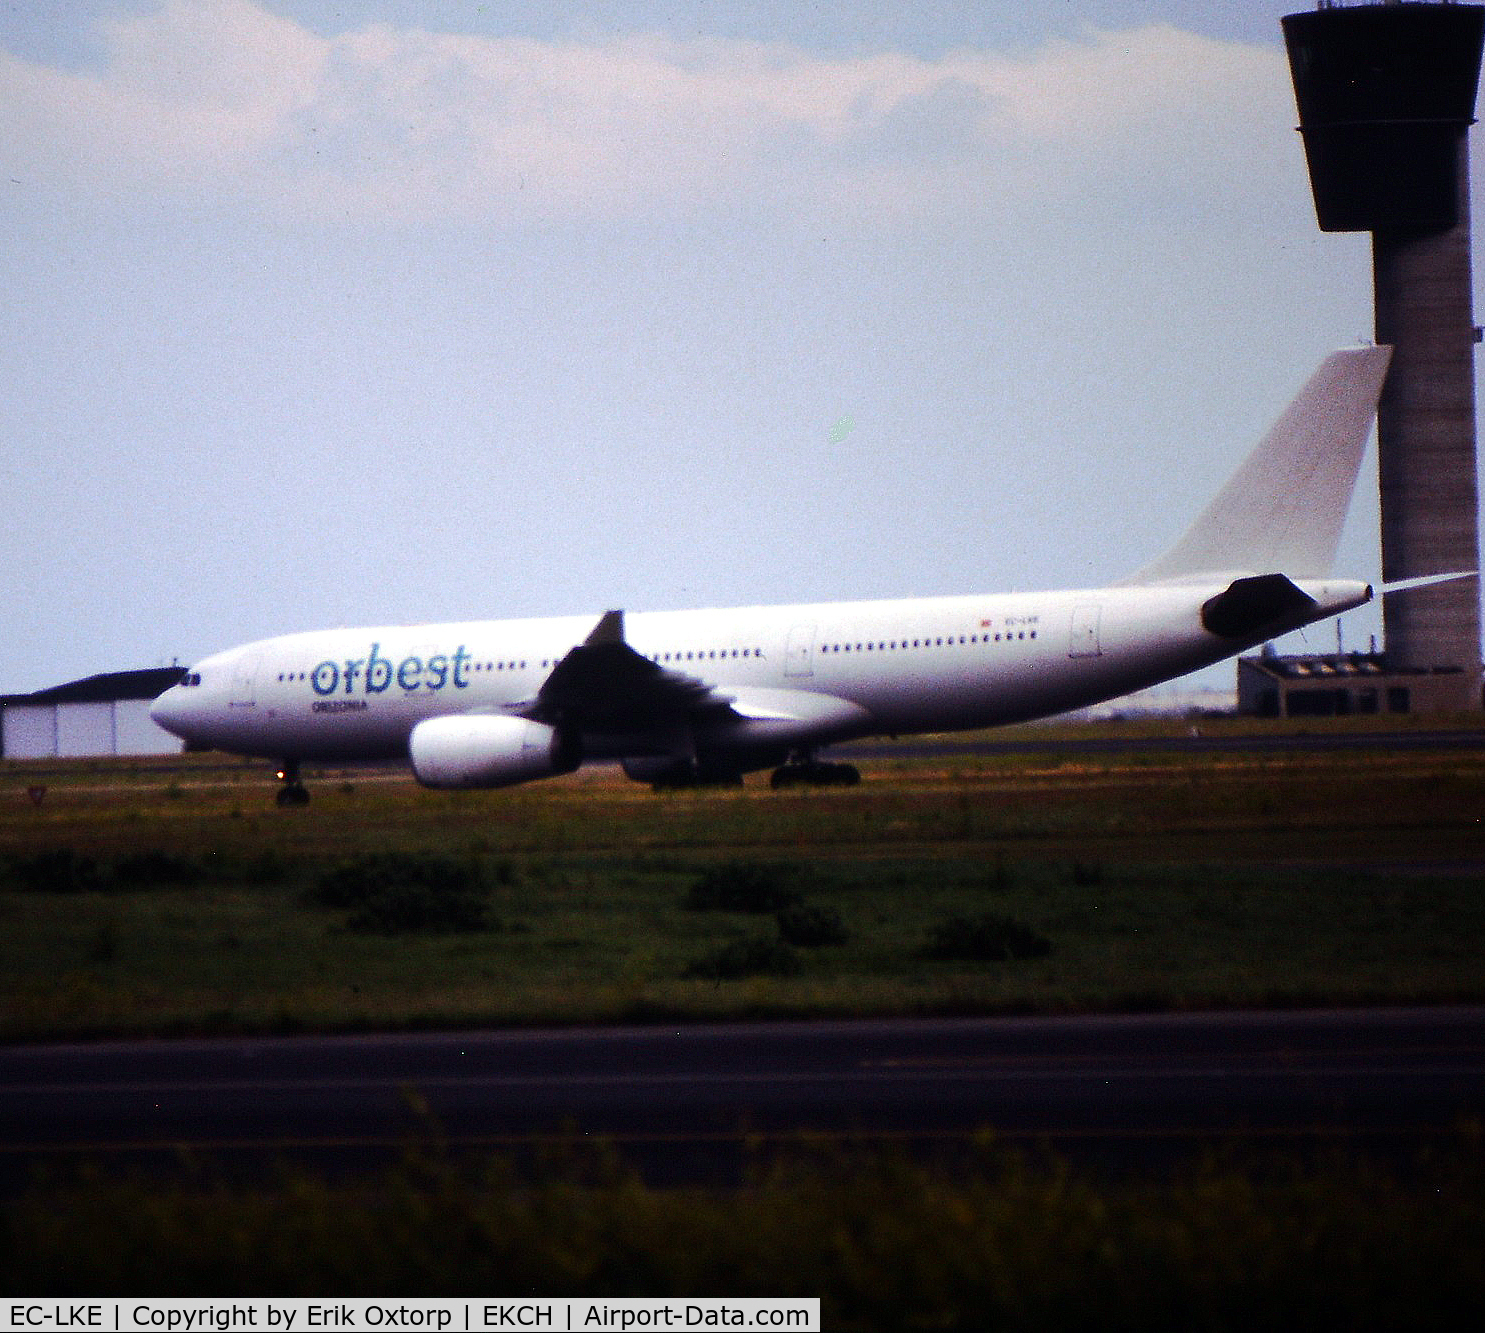 EC-LKE, 2002 Airbus A330-243 C/N 461, EC-LKE in CPH JUL12
Scanned slide